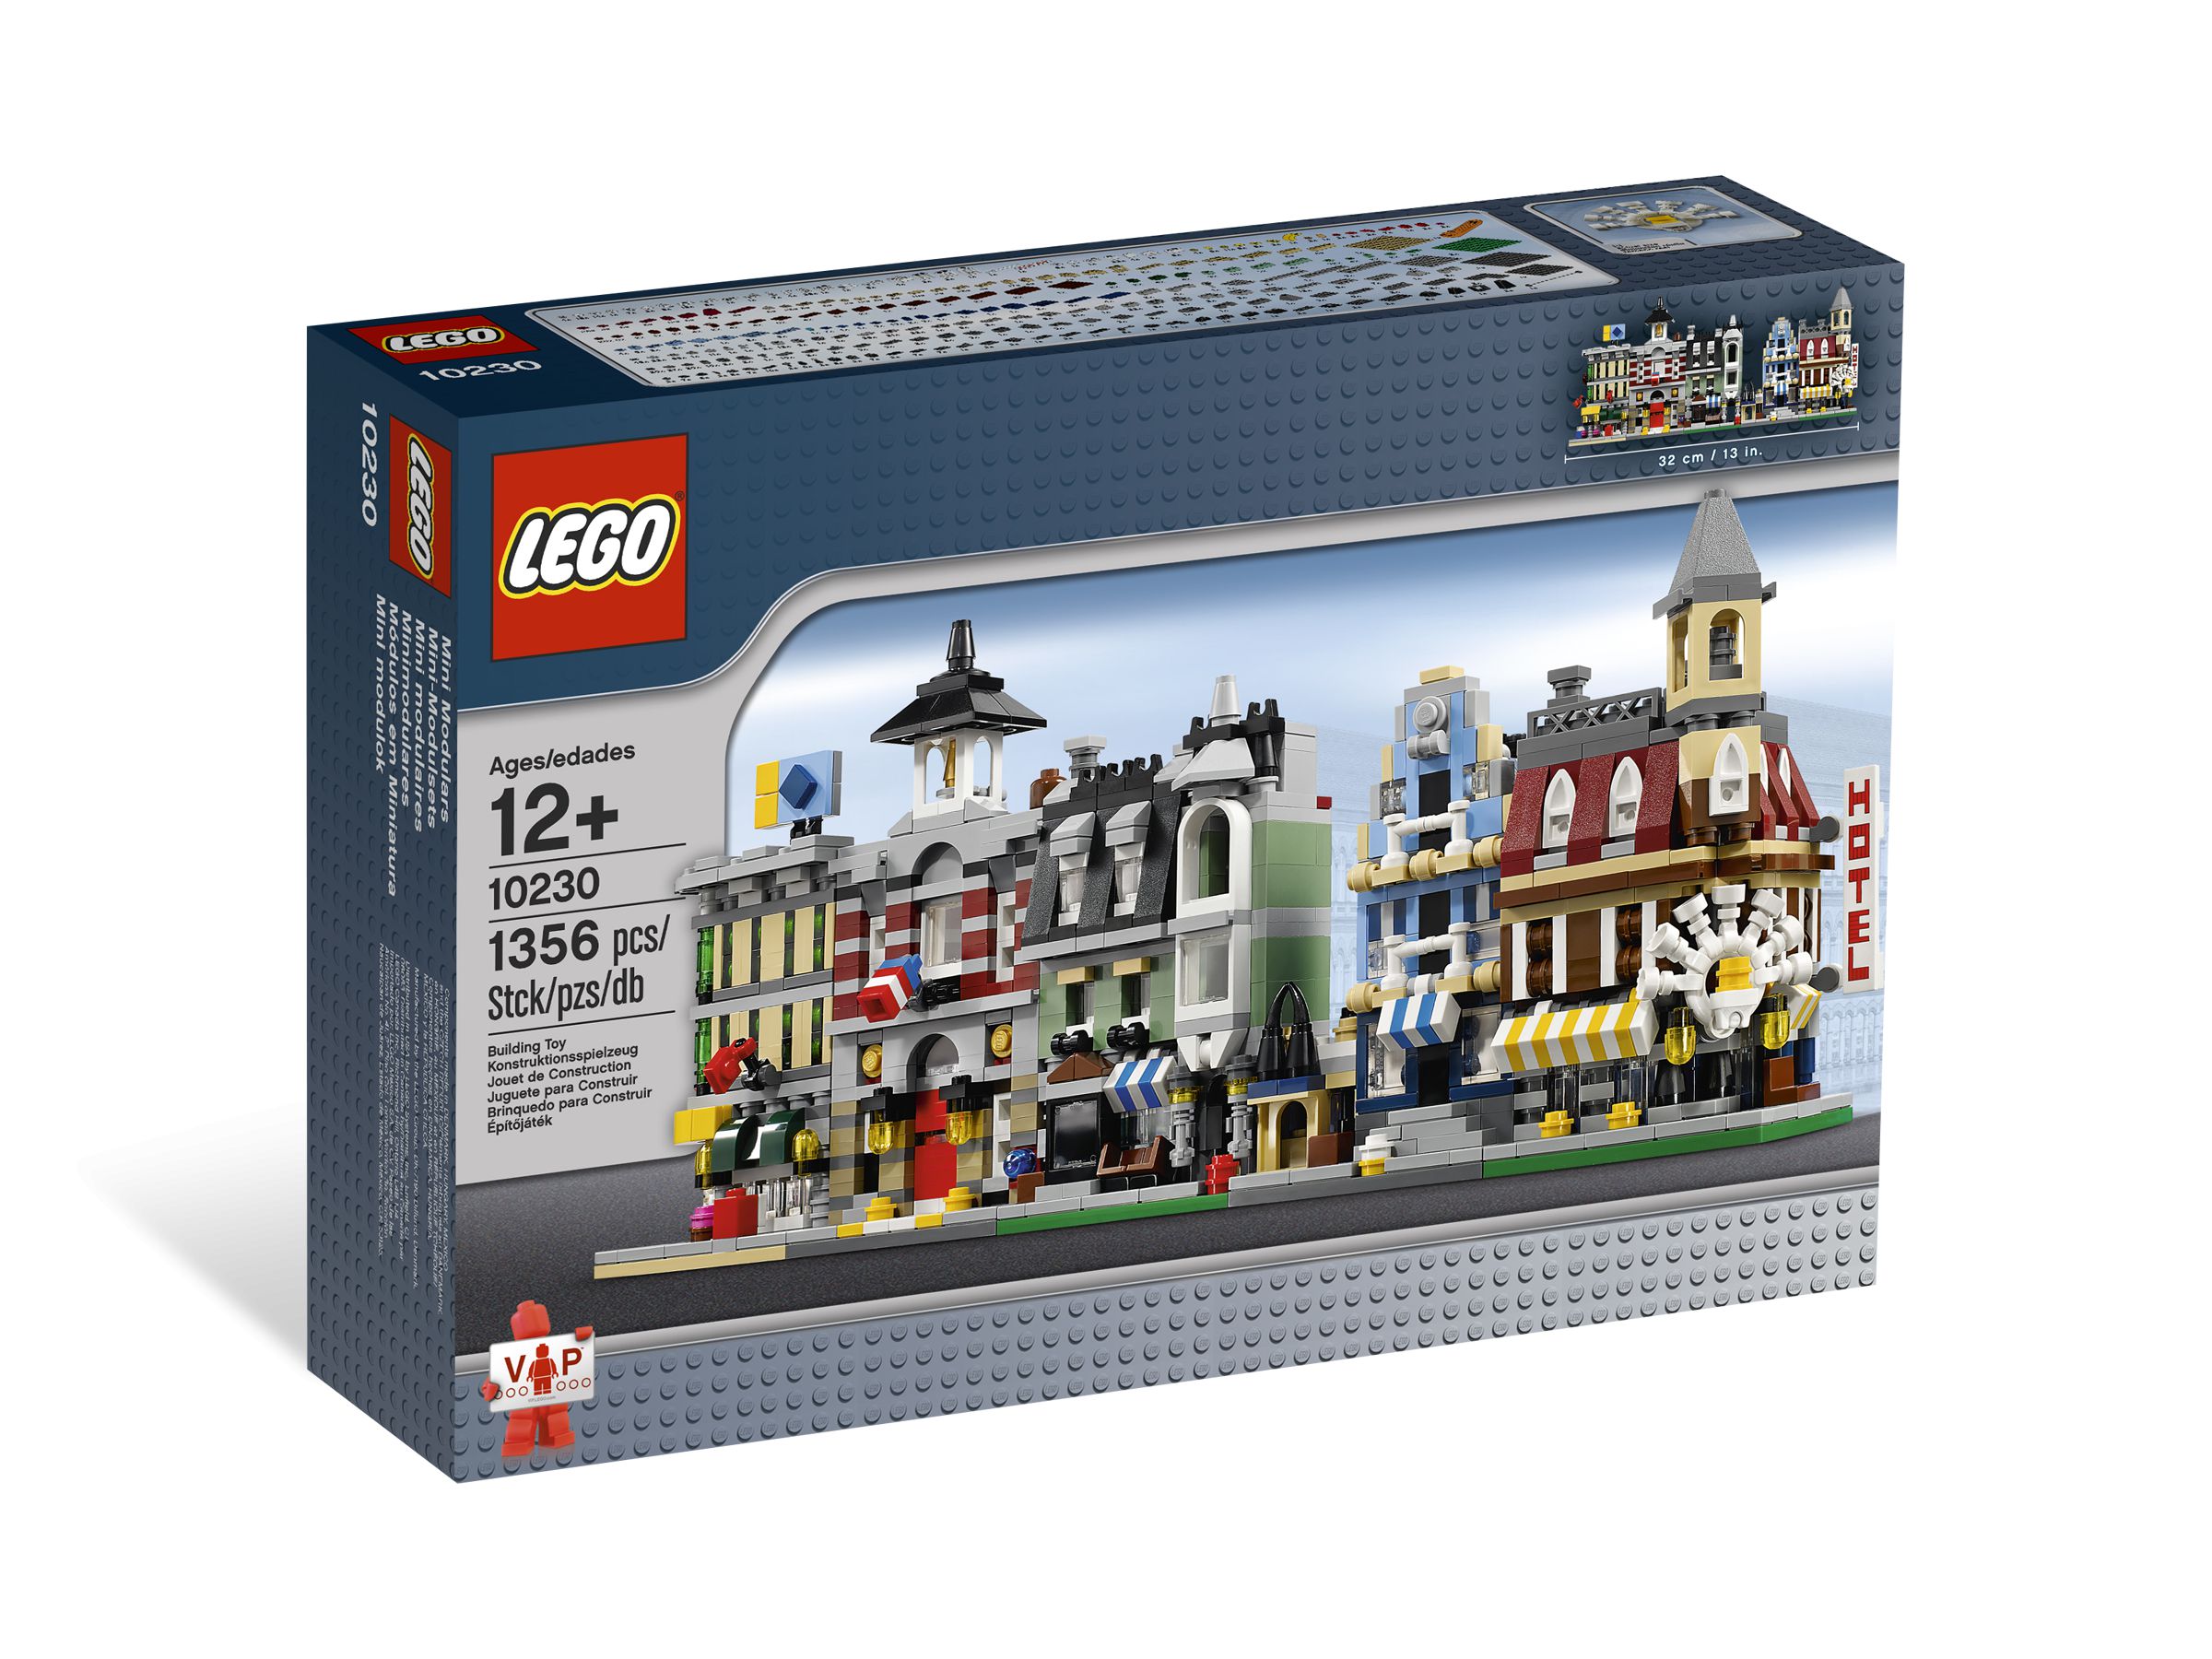 LEGO Advanced Models 10230 Mini-Modulsets LEGO_10230_alt1.jpg